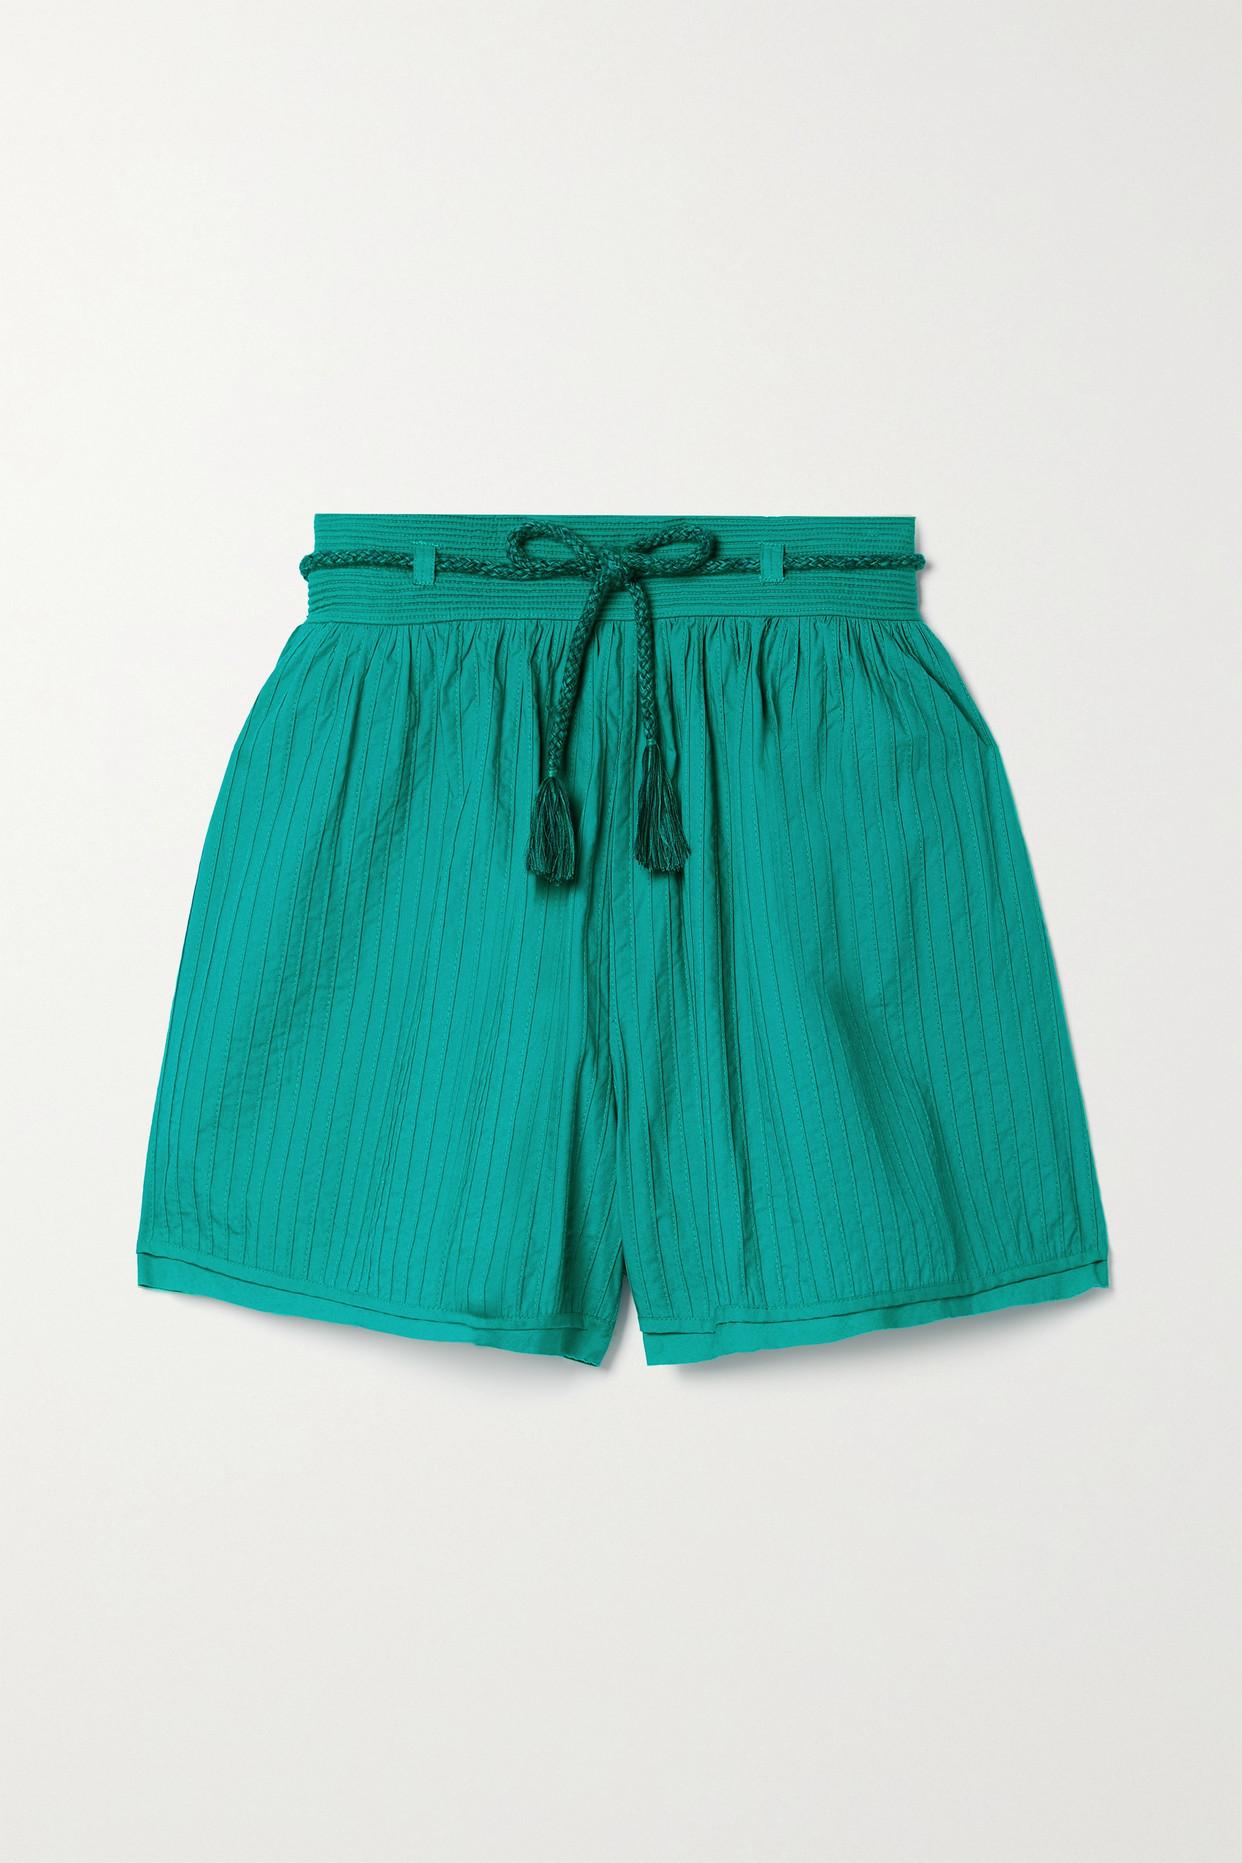 Ulla Johnson Rina Pintucked Cotton-voile Shorts in Green | Lyst